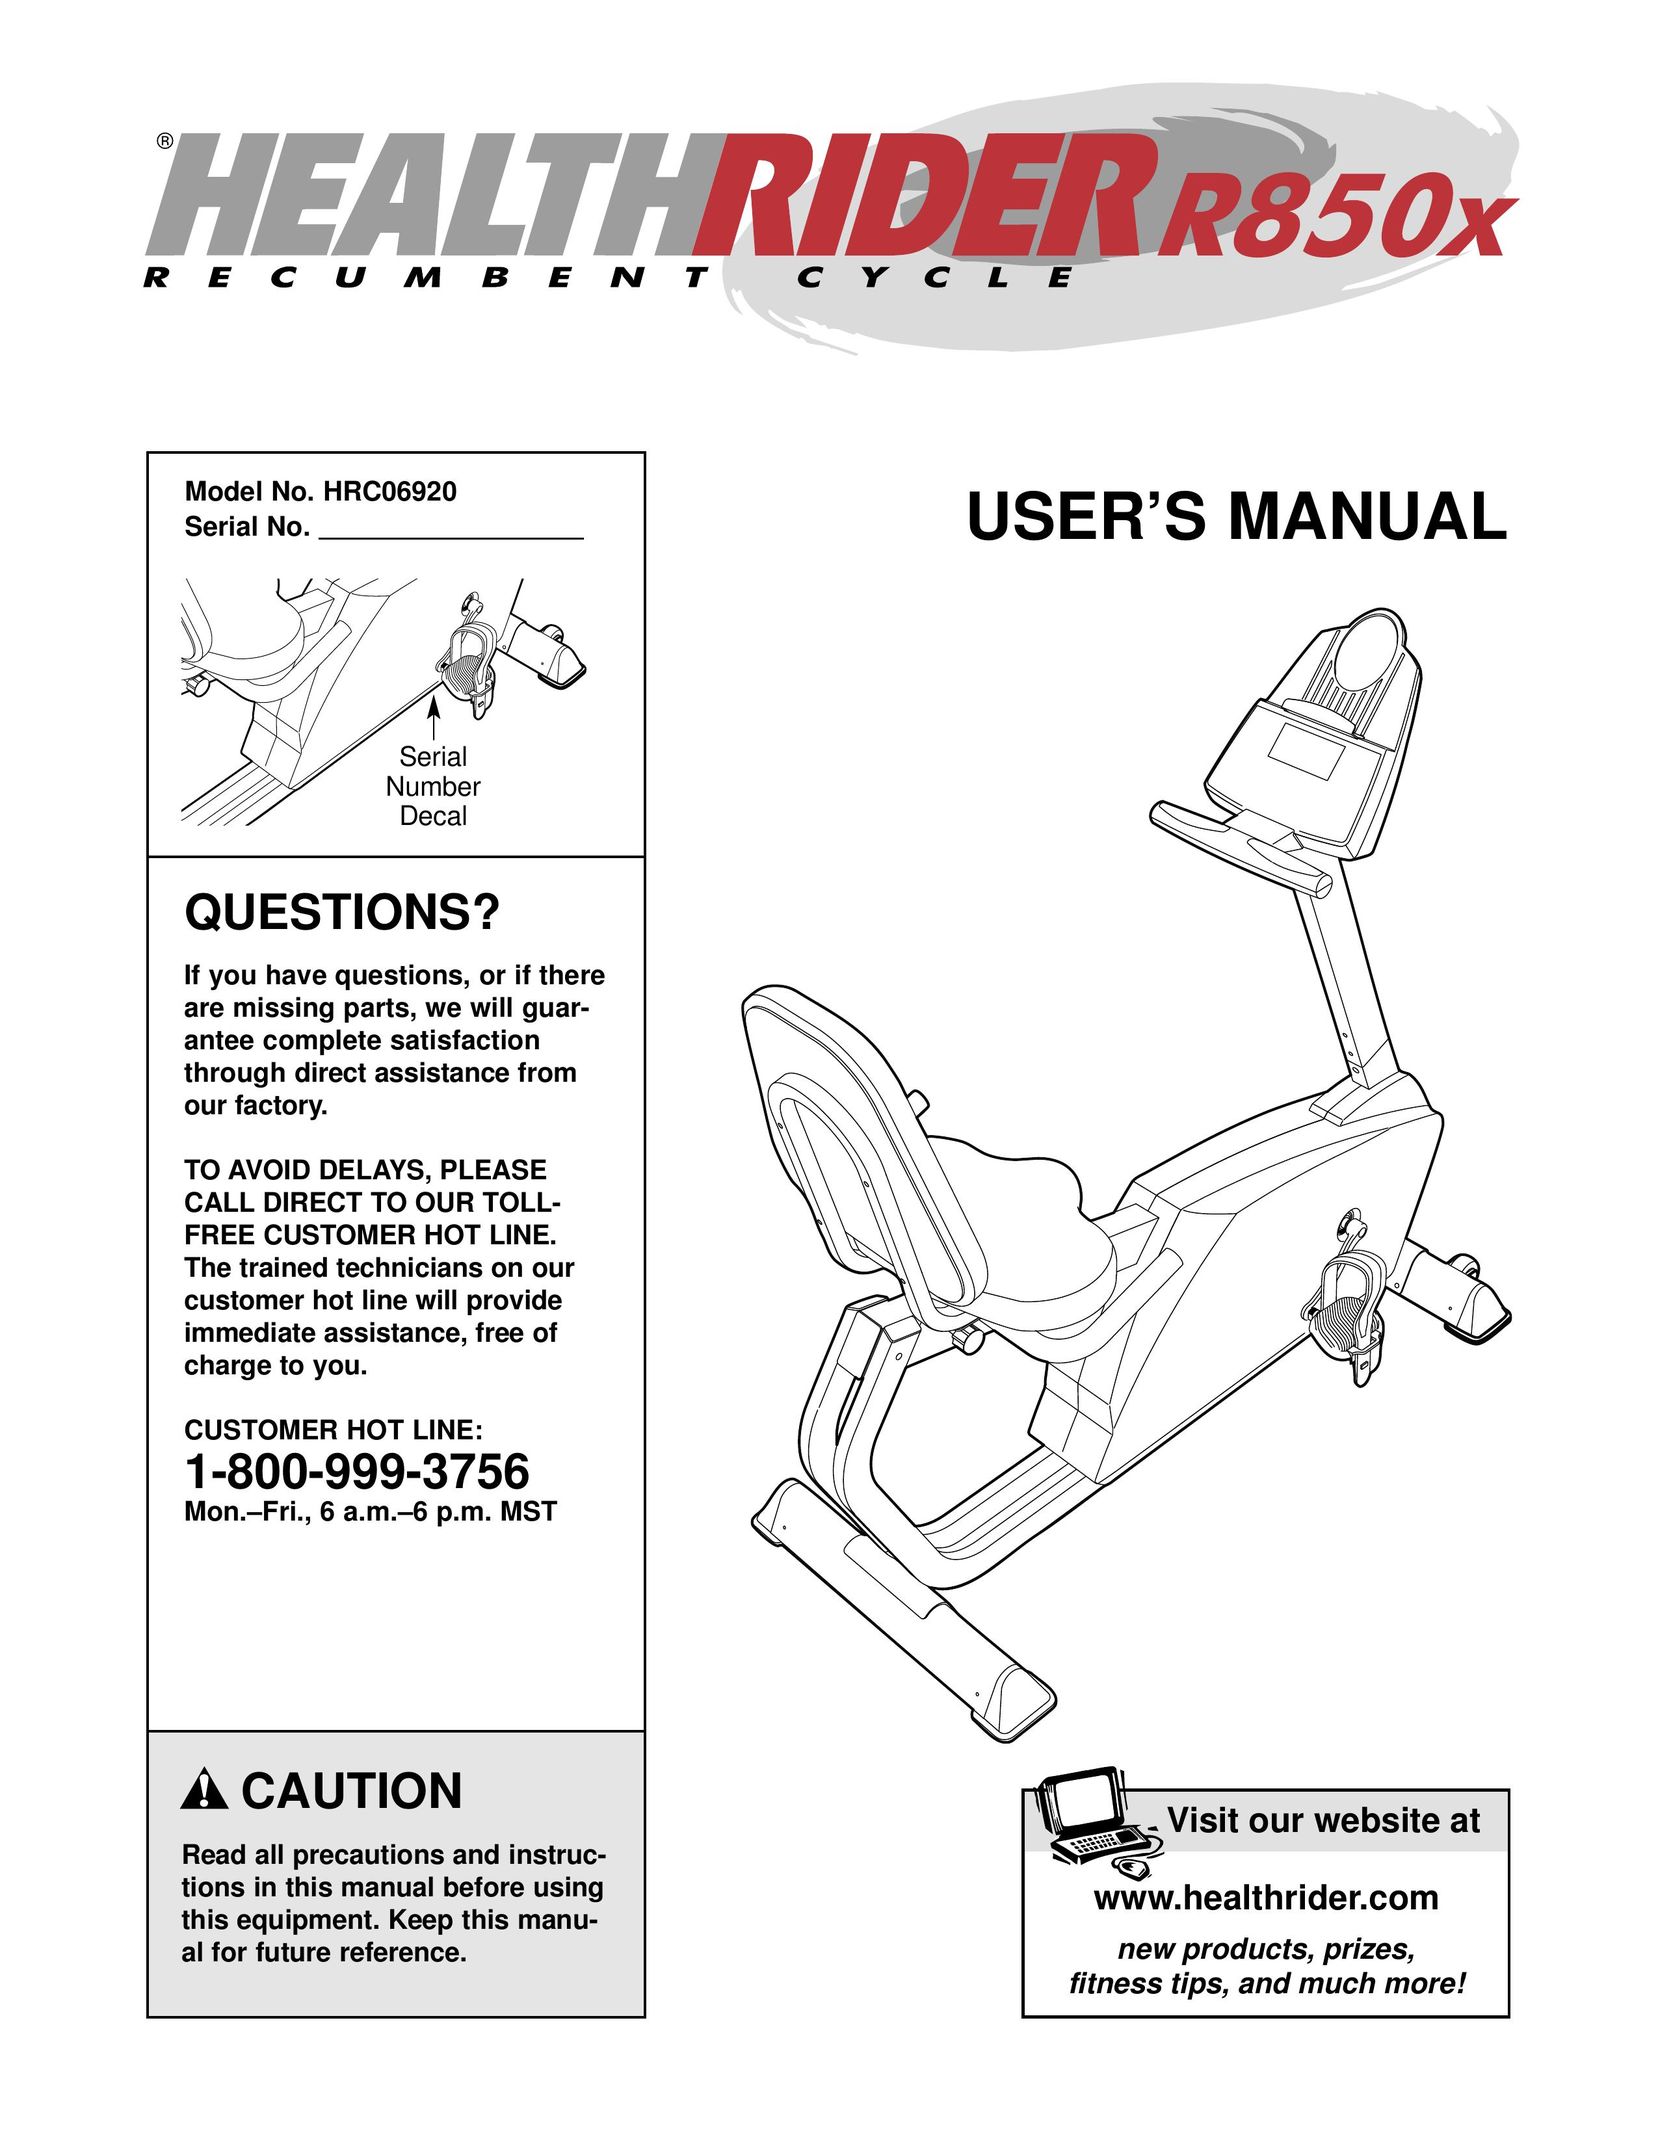 Healthrider R850x Exercise Bike User Manual